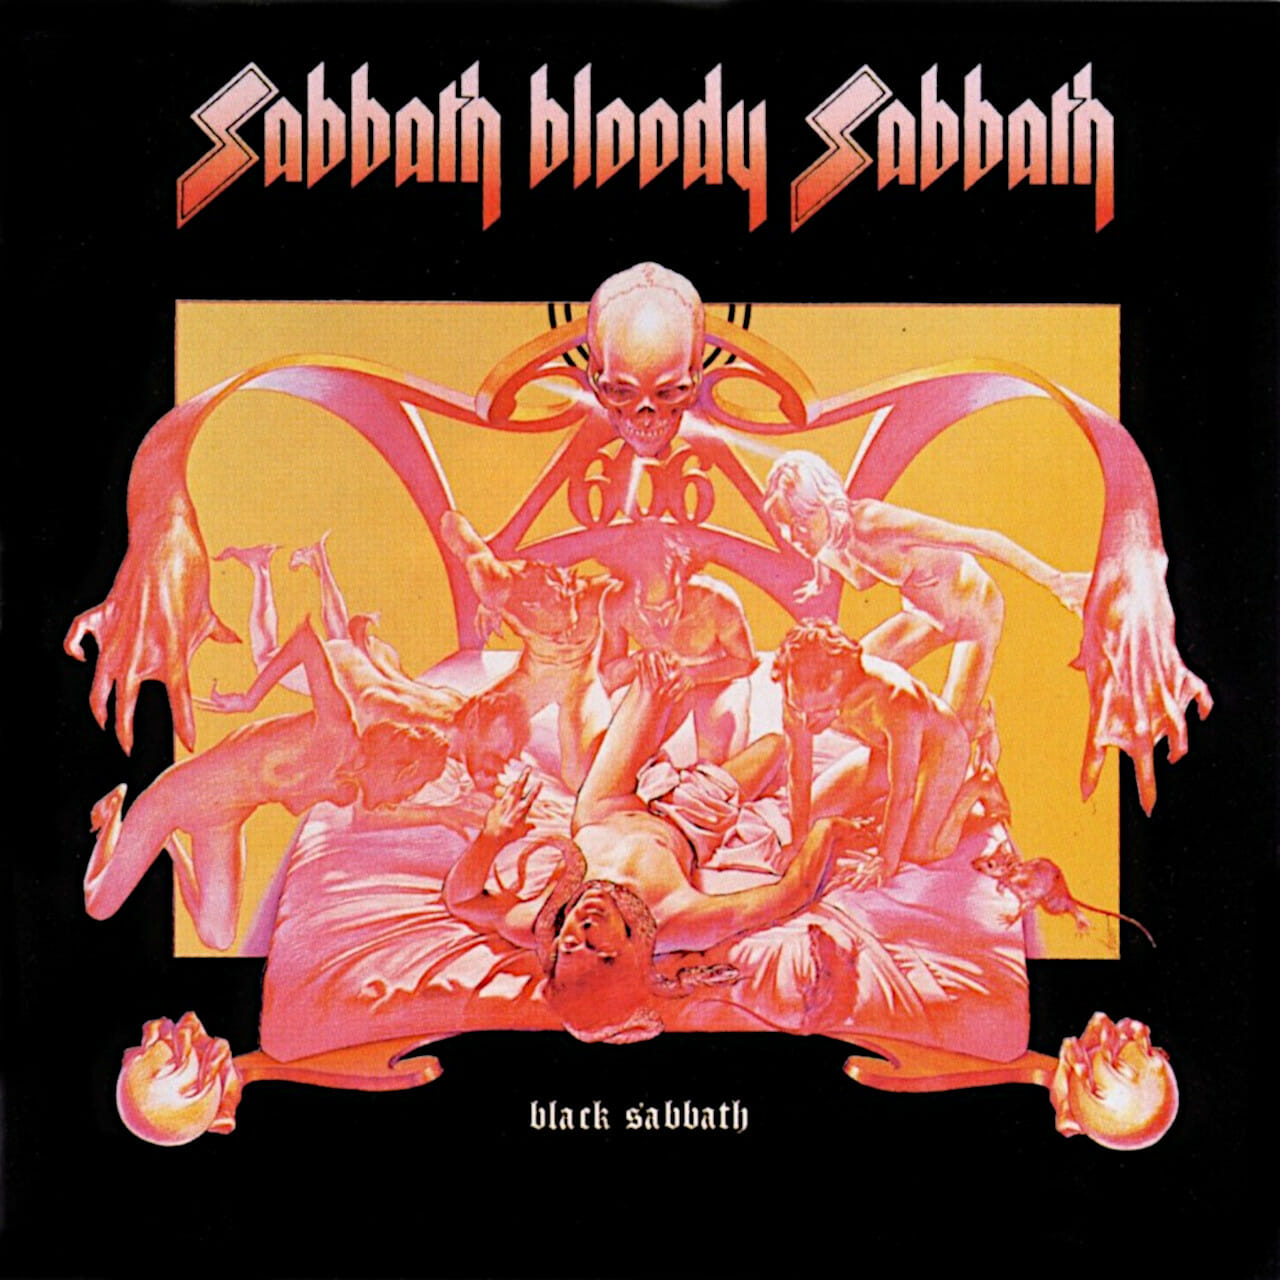 Black Sabbath - Sábado sangriento